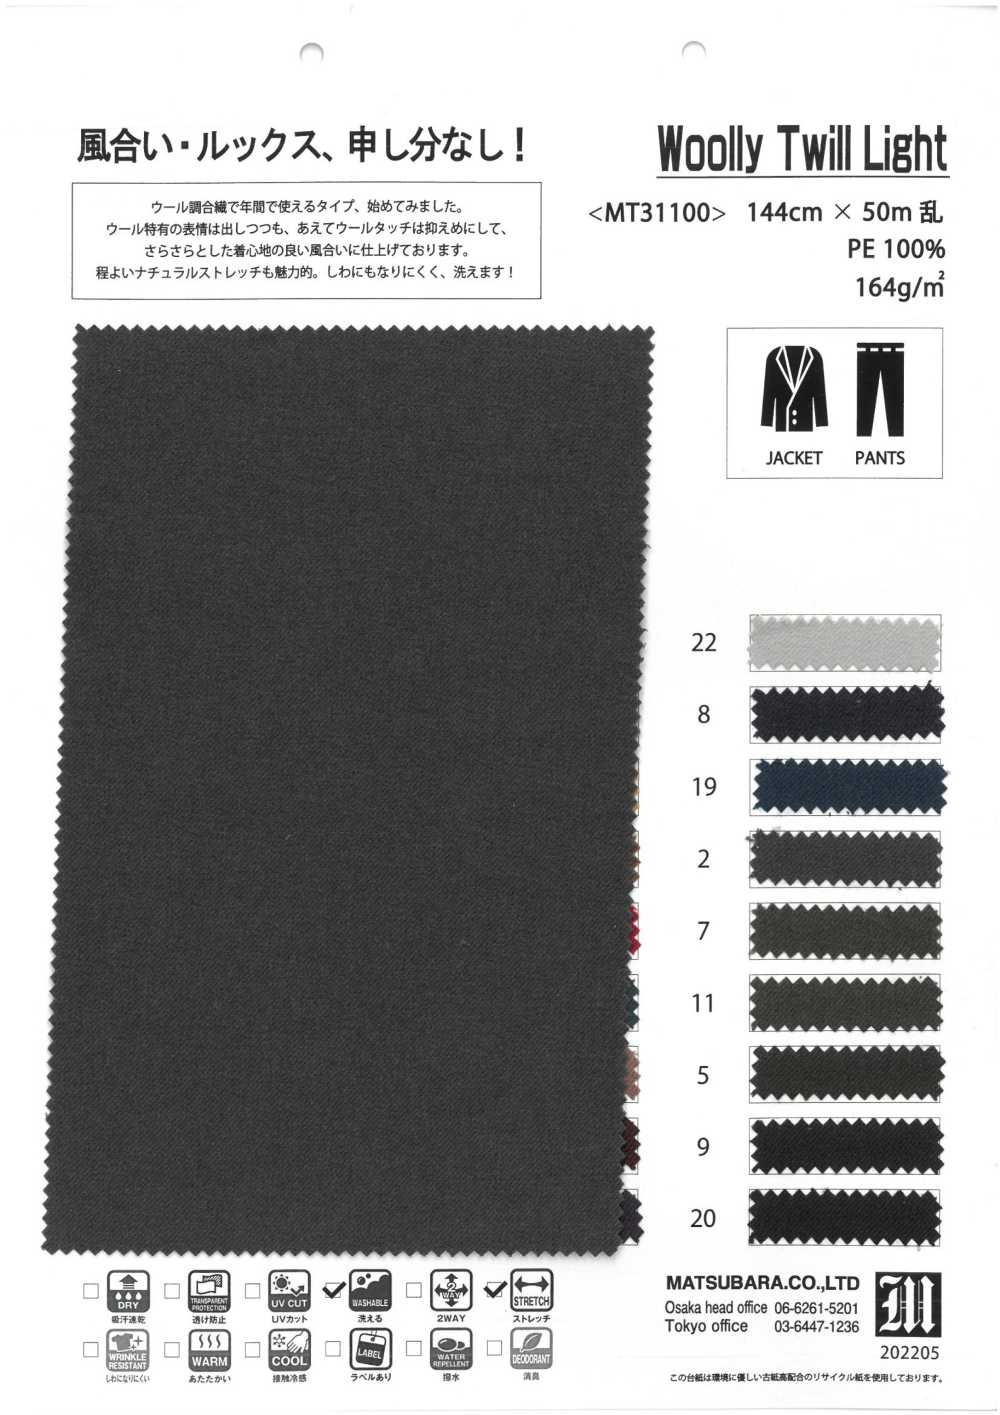 MT31100 Wookky Twill Light[Textilgewebe] Matsubara